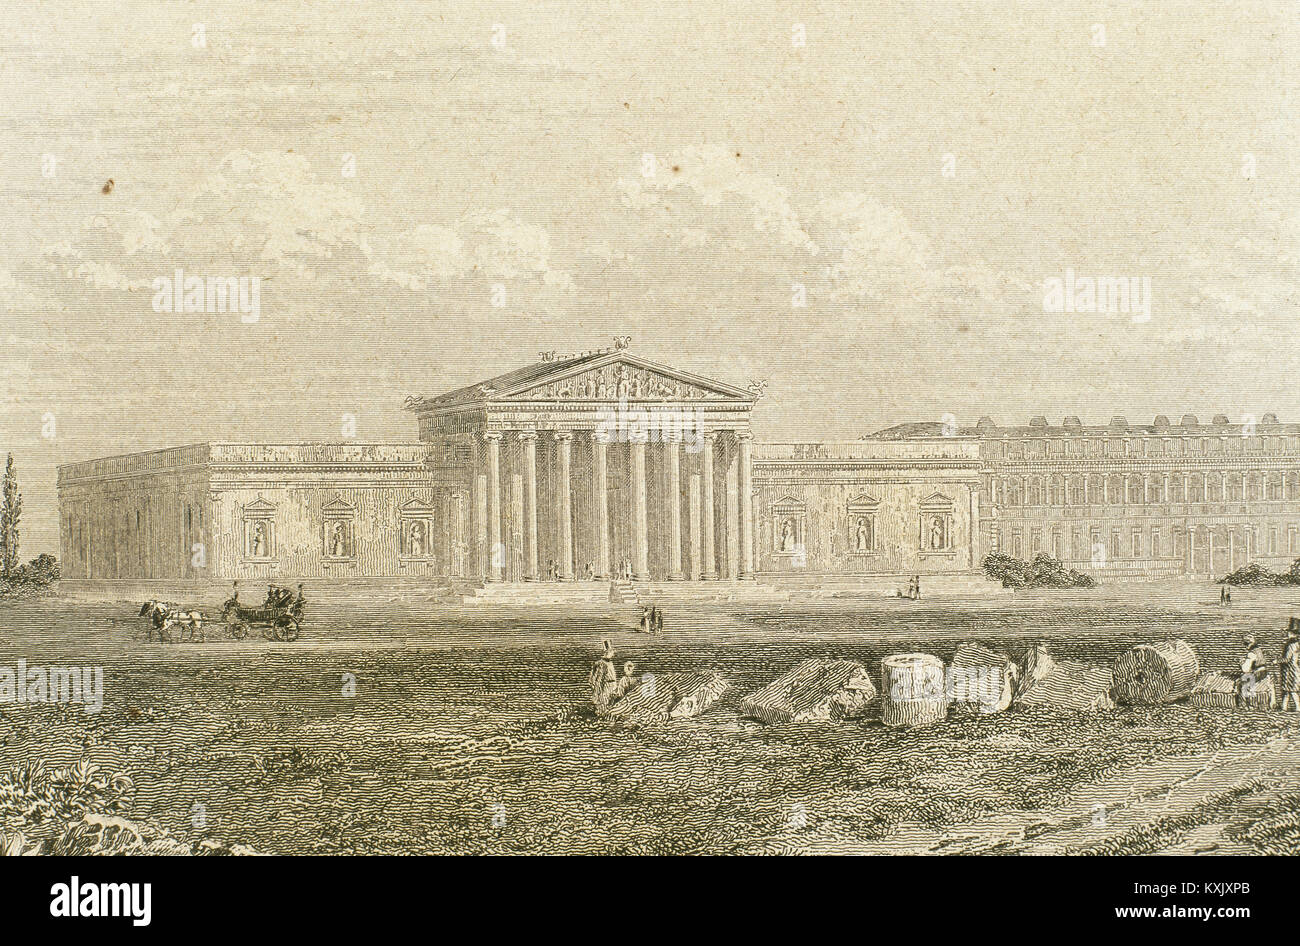 Germania. Monaco di Baviera. La Glyptothek. Incisione. Panorama Universale, 1843. Foto Stock